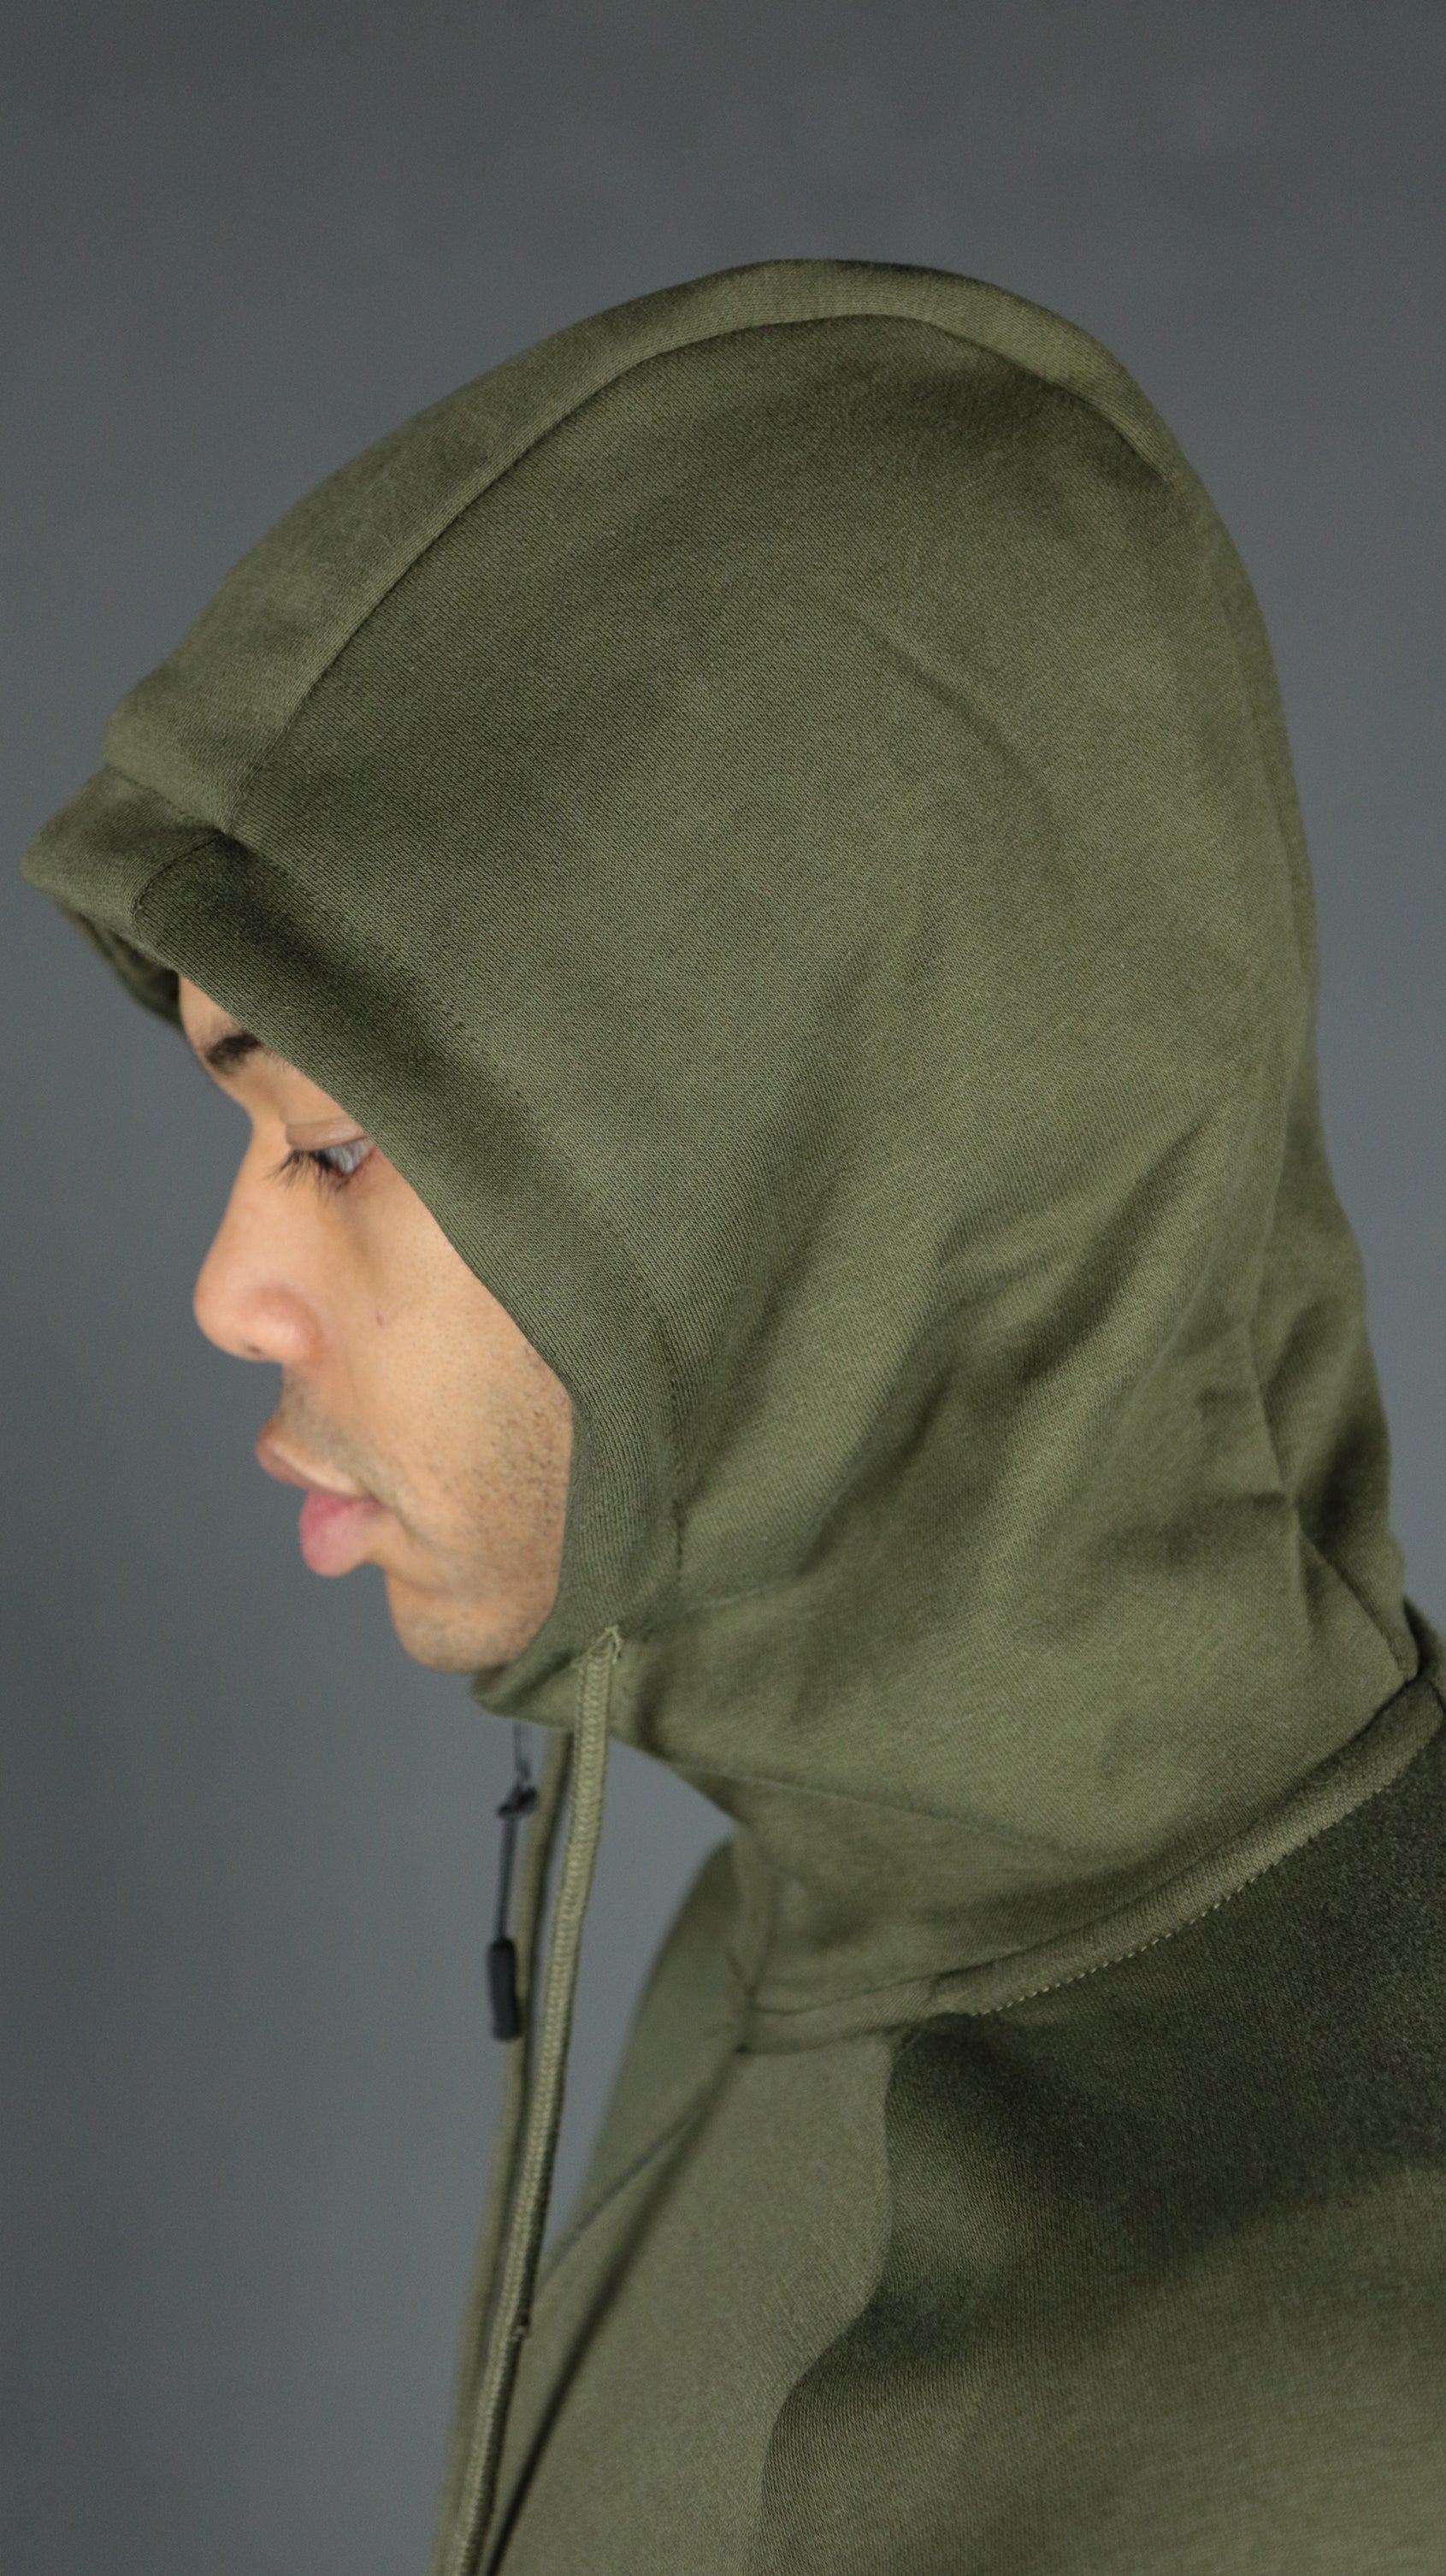 The three panel fabric hood of the olive military green Jordan Craig basic tech fleece zipup hoodie.